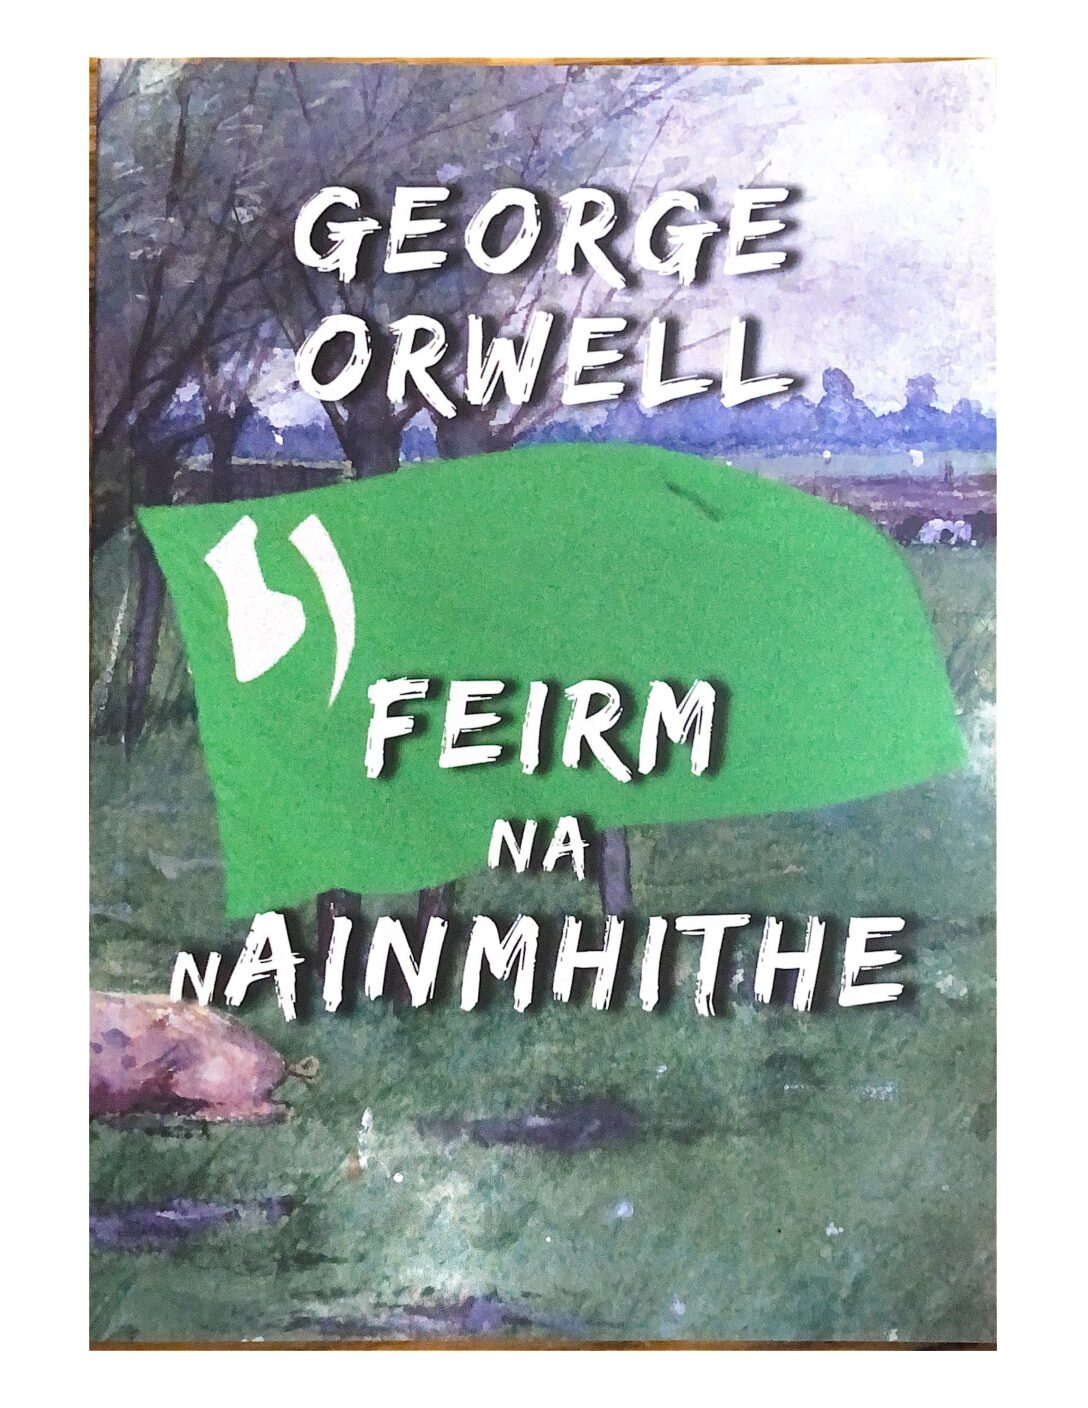 Feirm Na Nainmhithe by George Orwell